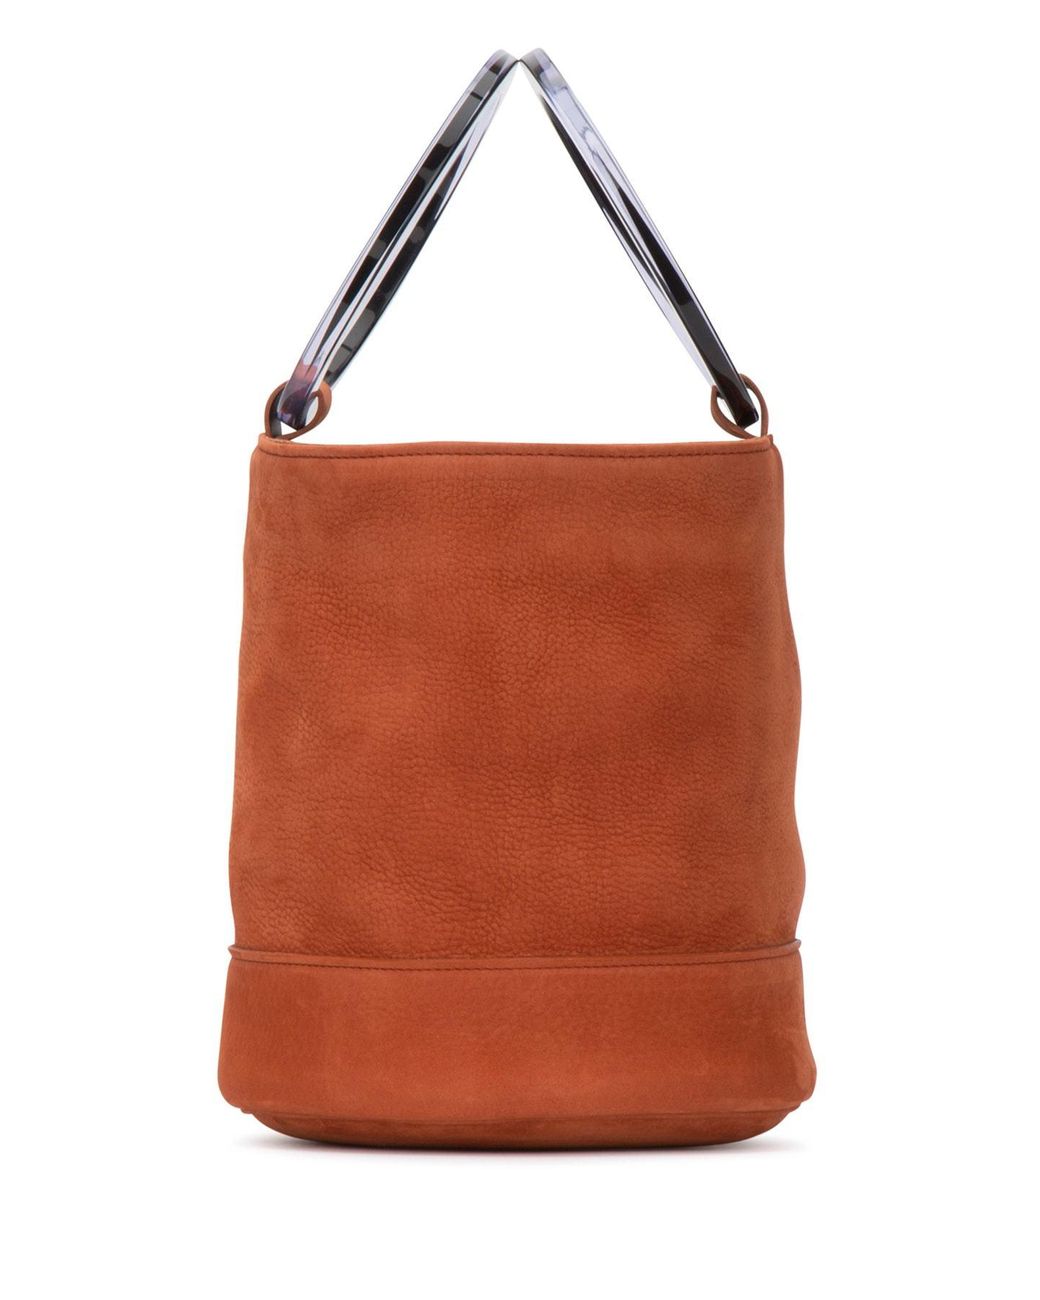 Simon Miller Leather Medium Bonsai Bucket Bag in Red - Lyst